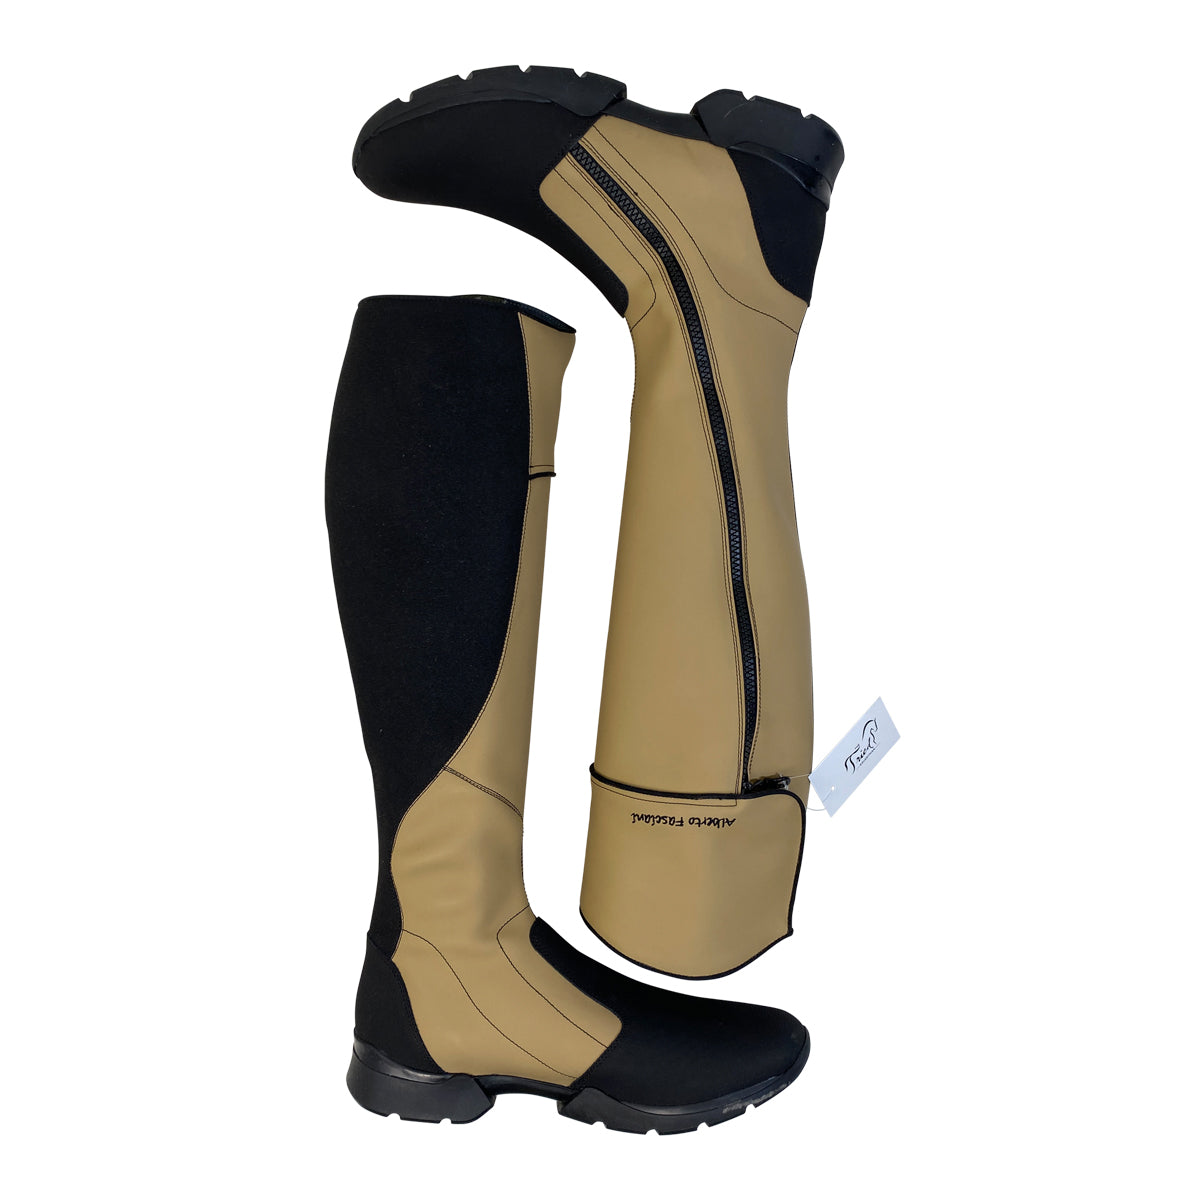 Alberto Fasciani 'Custo' Training Boots in Beige/Black